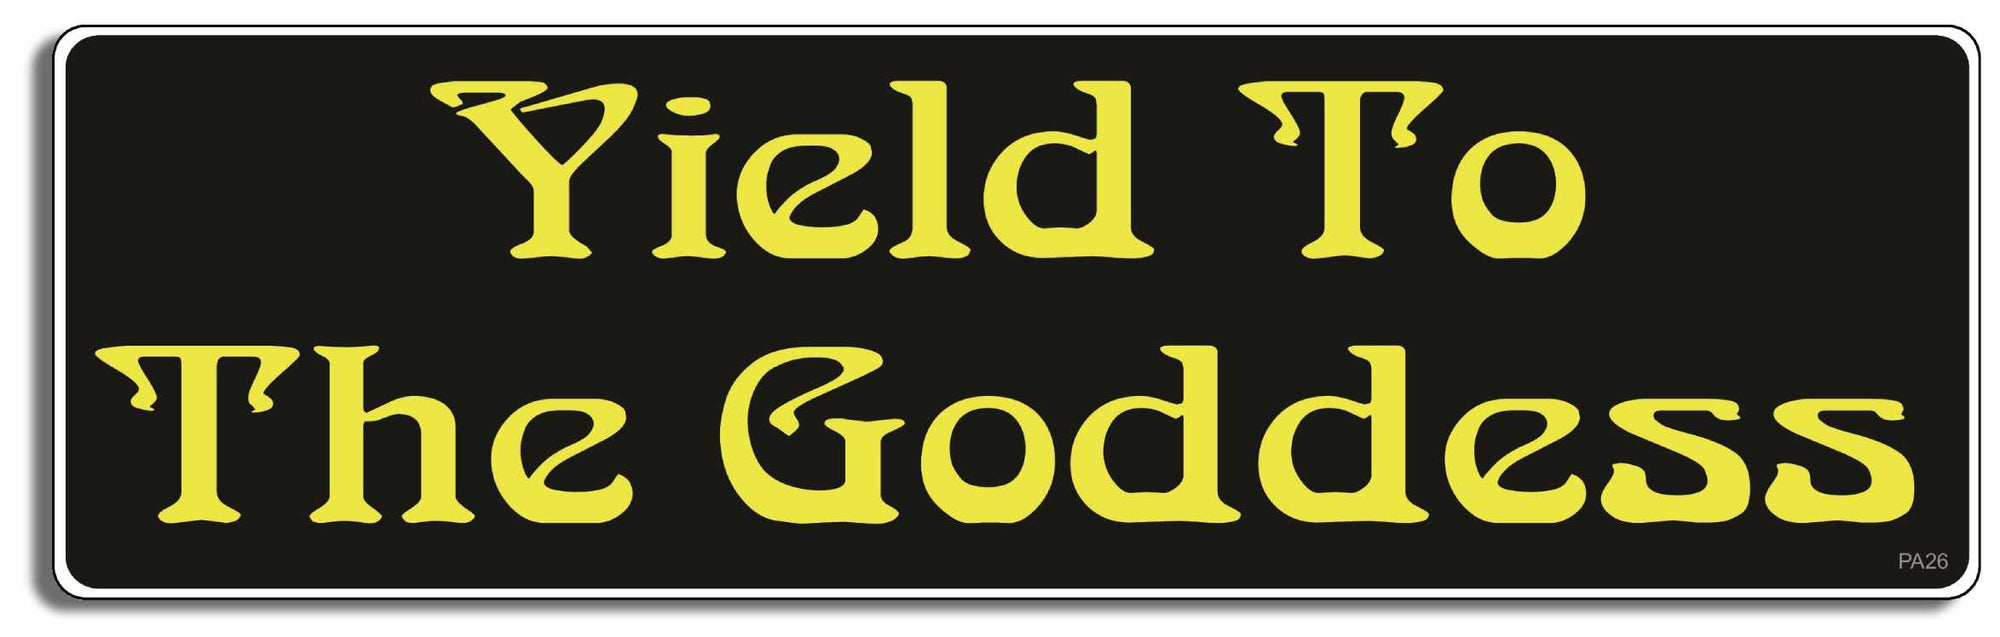 Yield to the Goddess - 3" x 10" Bumper Sticker--Car Magnet- -  Decal pagan Bumper Sticker Car Magnet Yield to the Goddess-   Decal for carsatheist, pagan, wiccan, witch